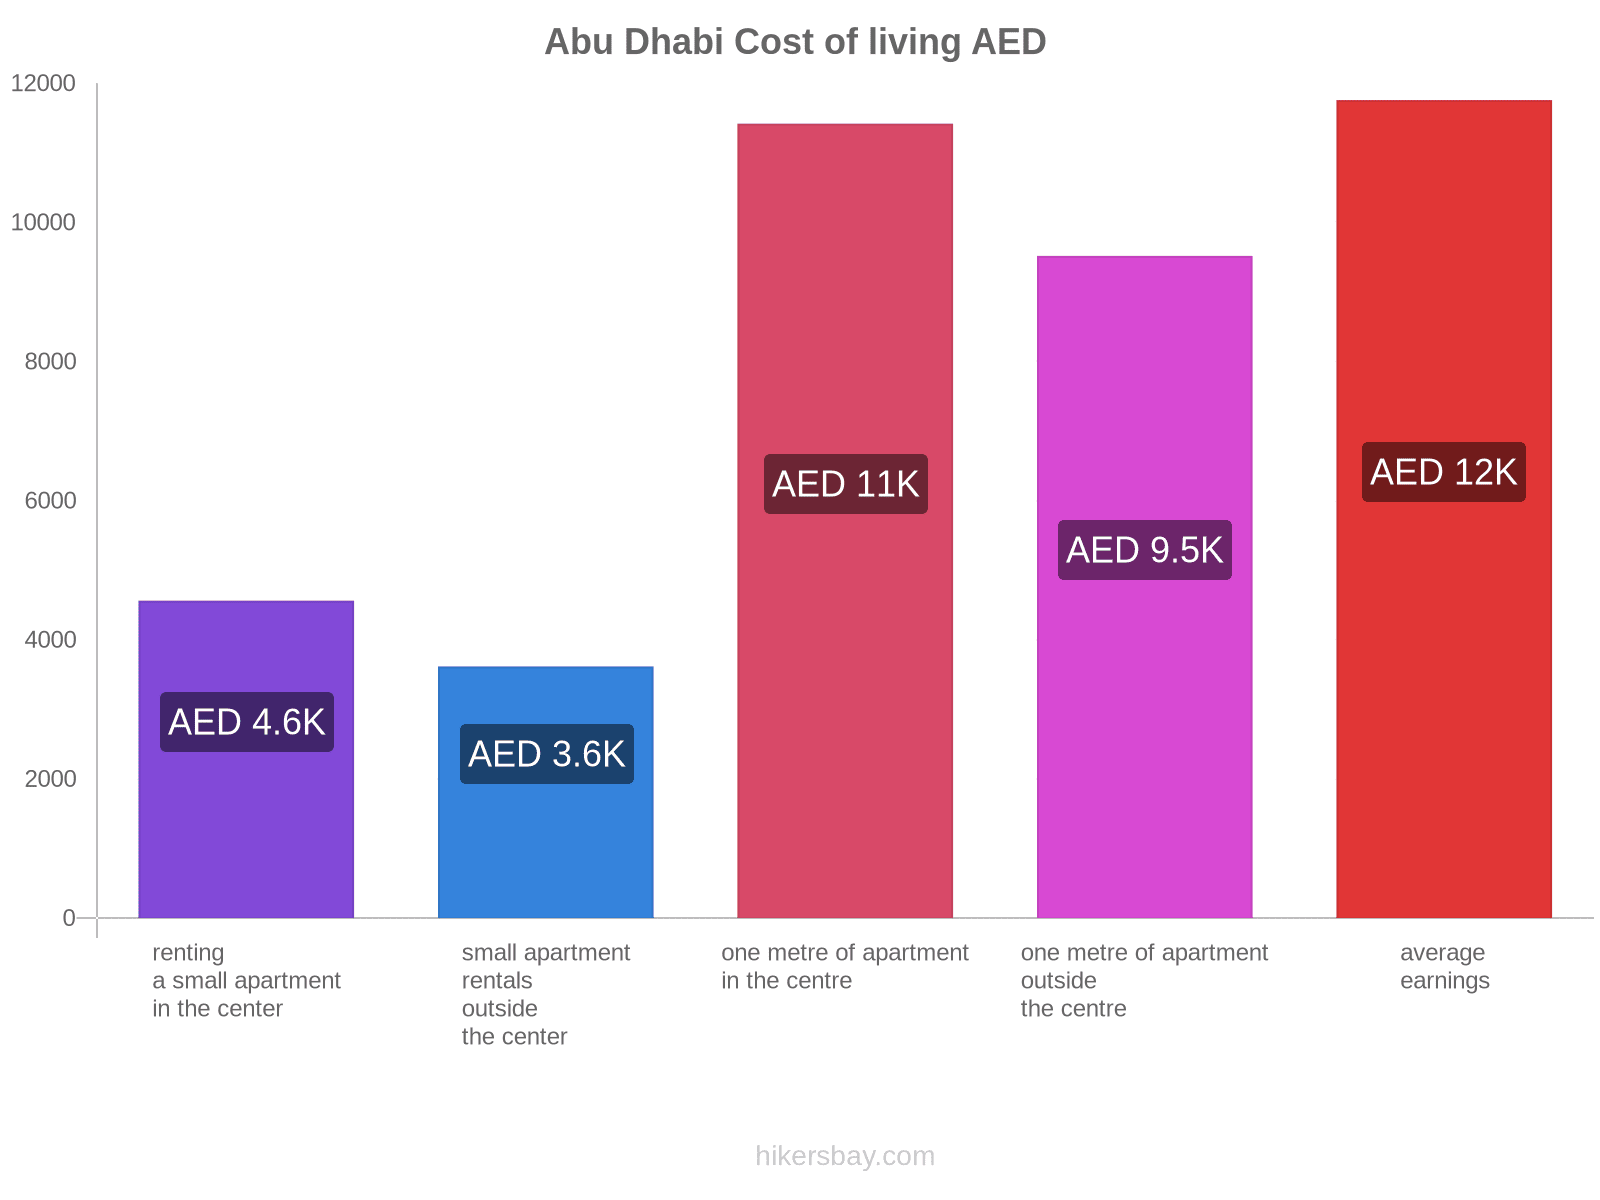 Abu Dhabi cost of living hikersbay.com